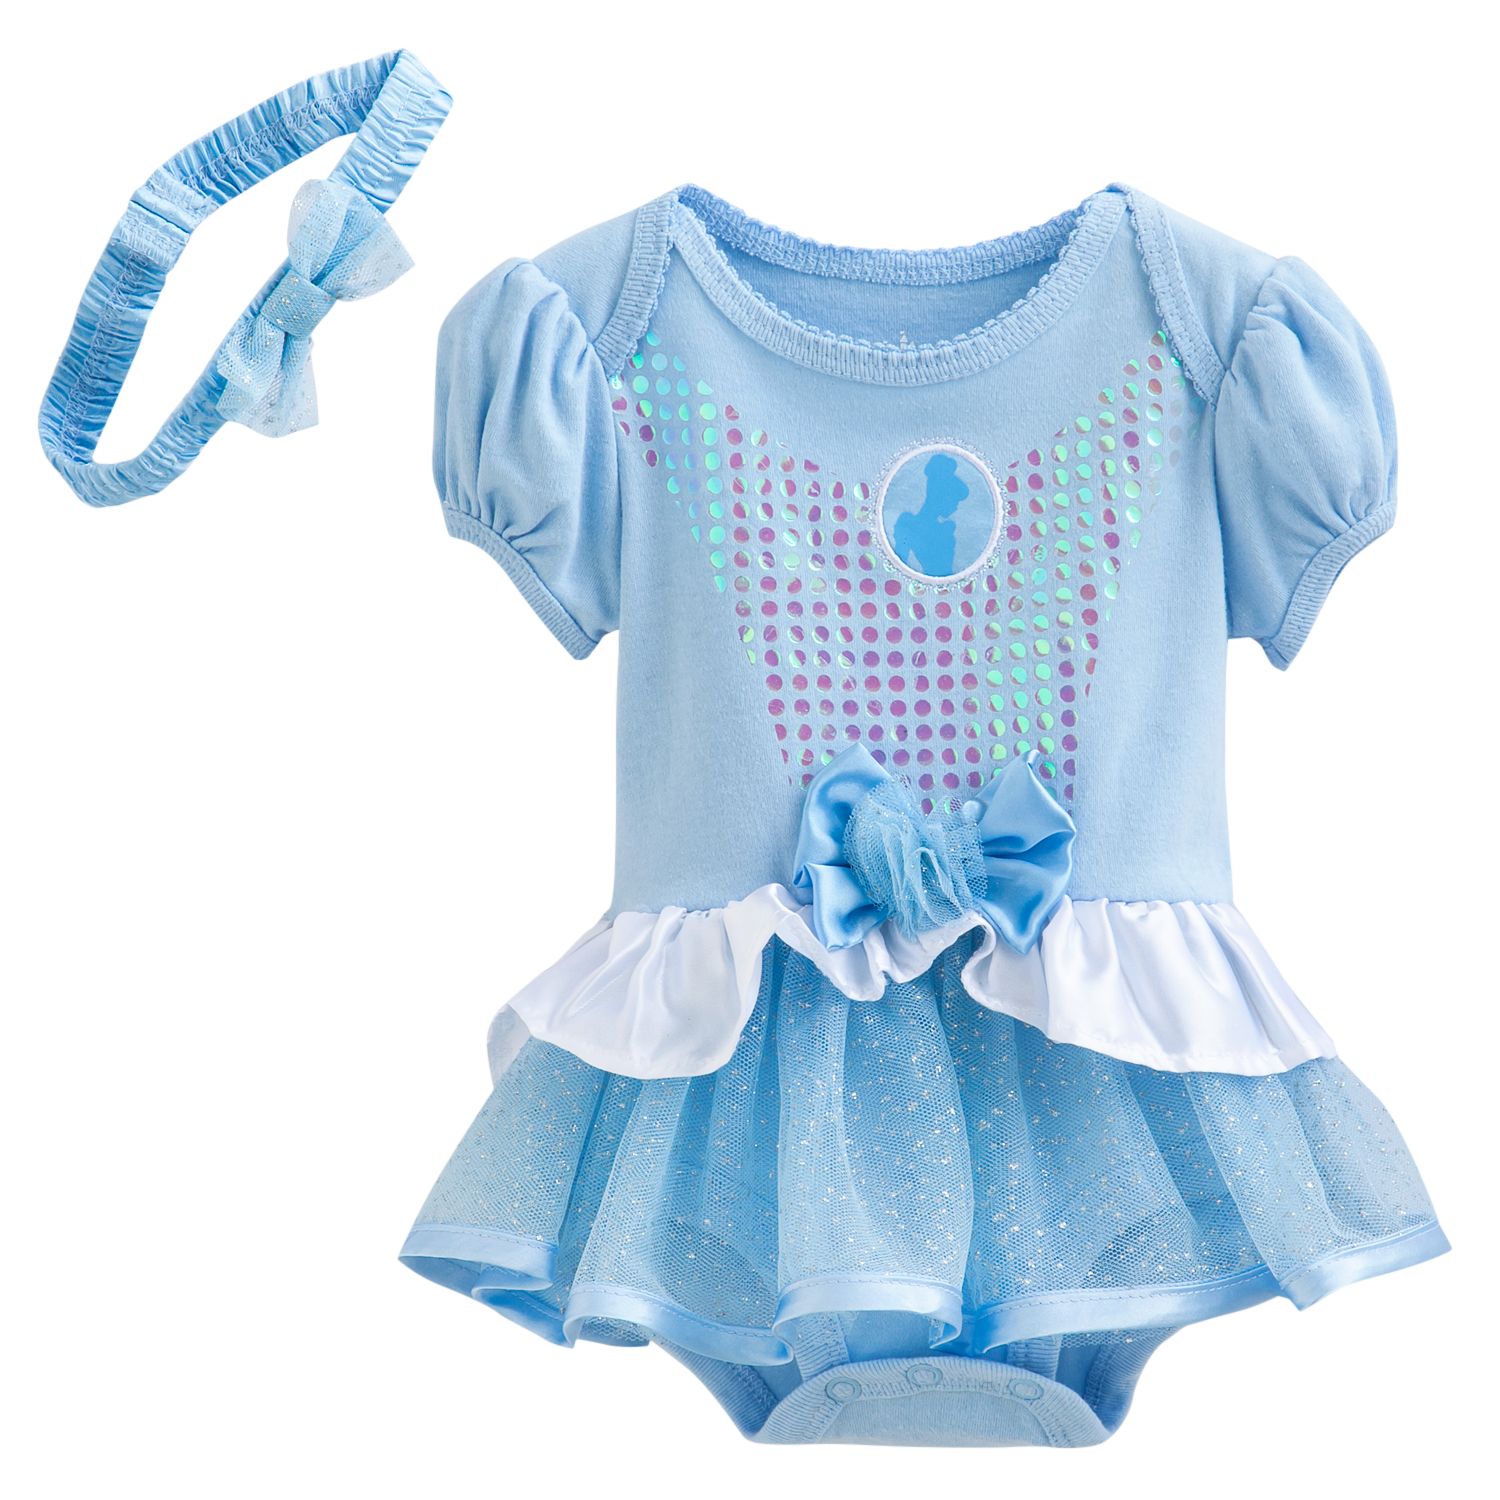 cinderella costume bodysuit for baby